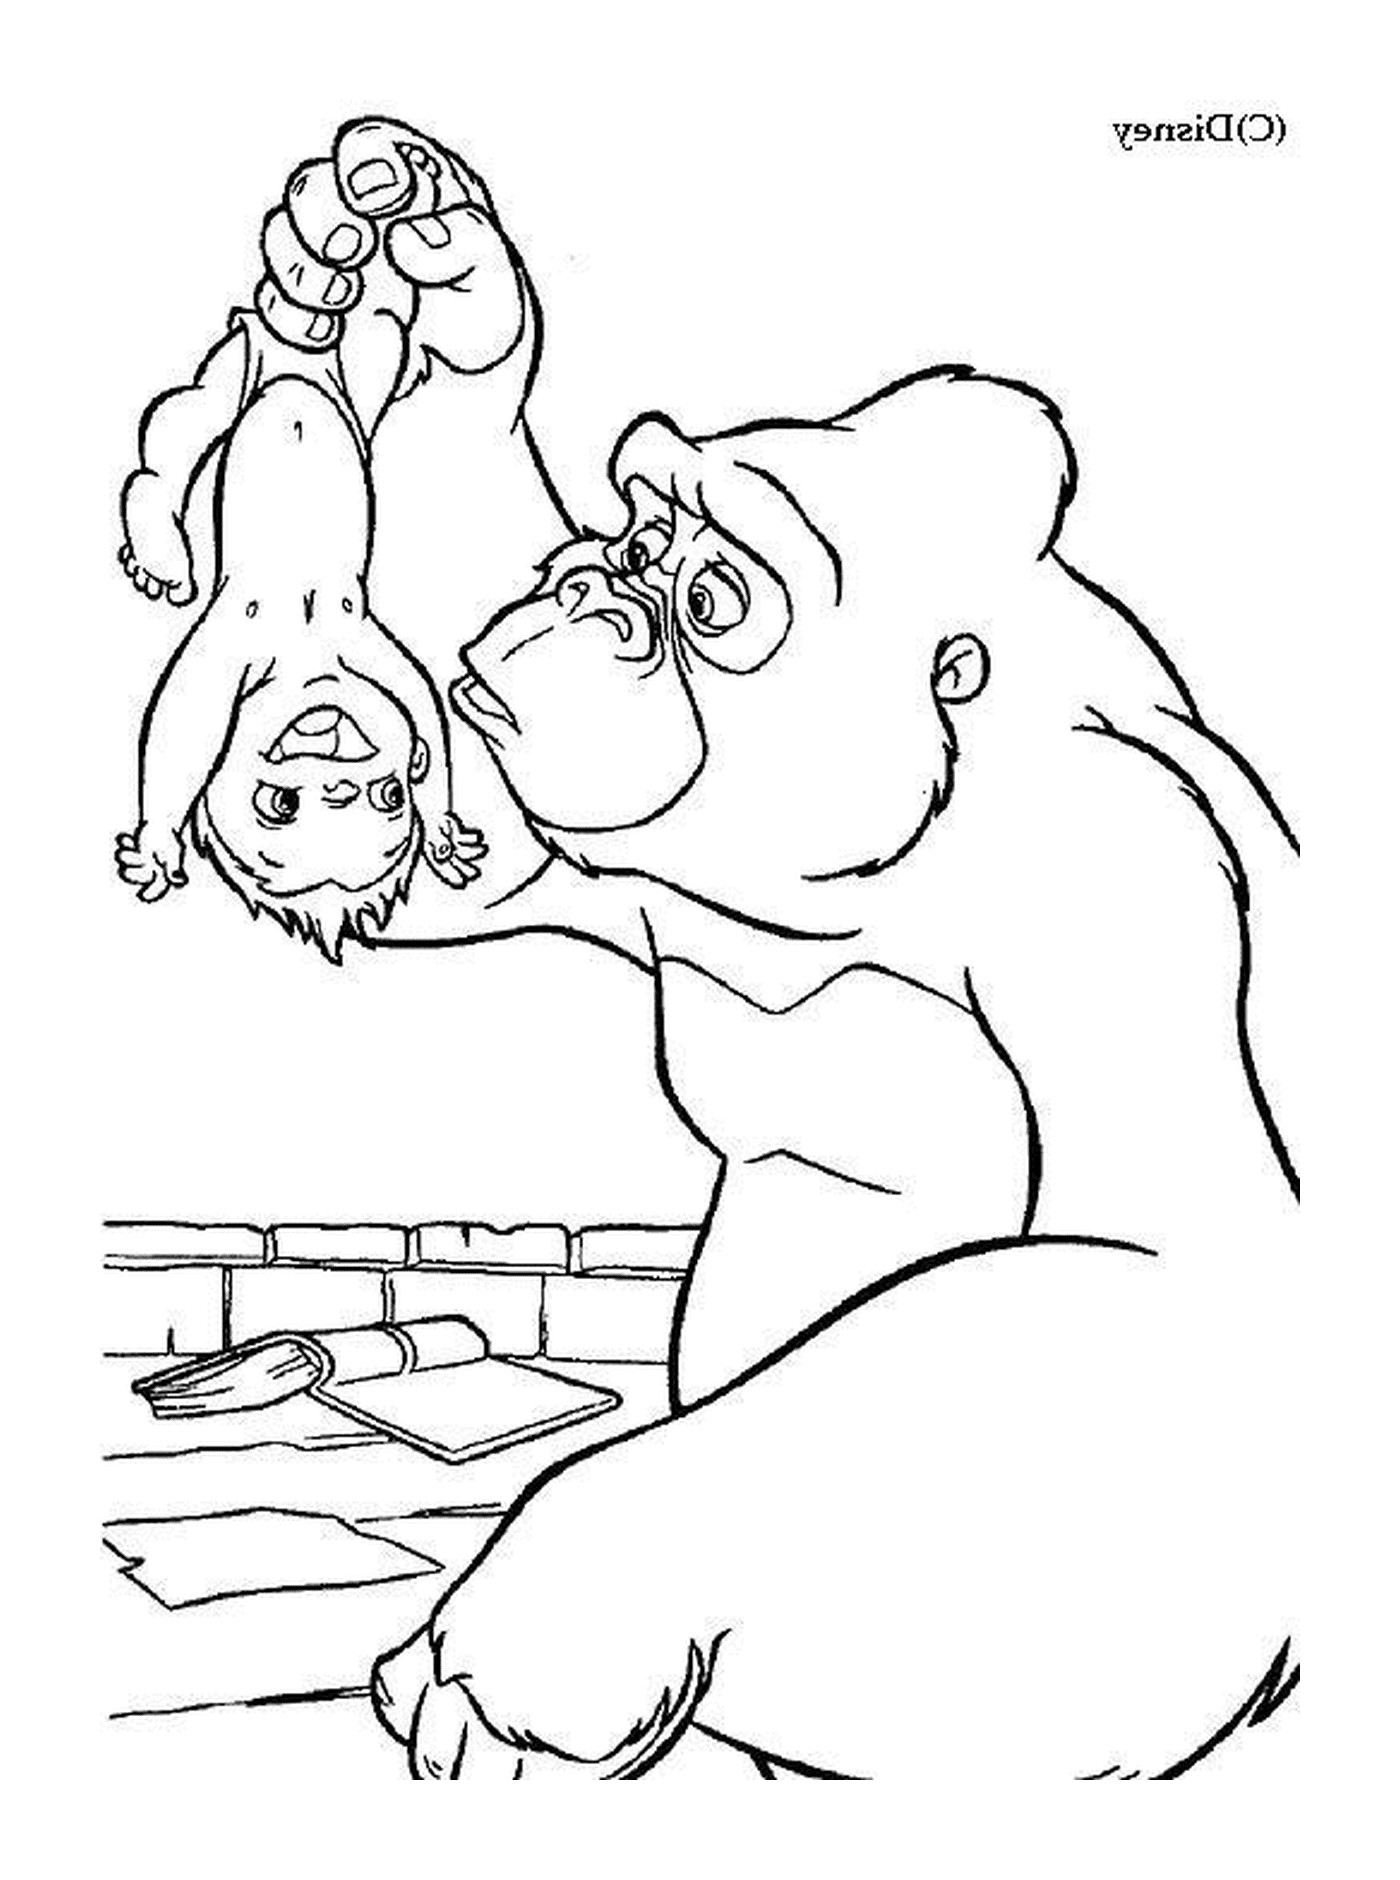  Gorila e menino brincando juntos 